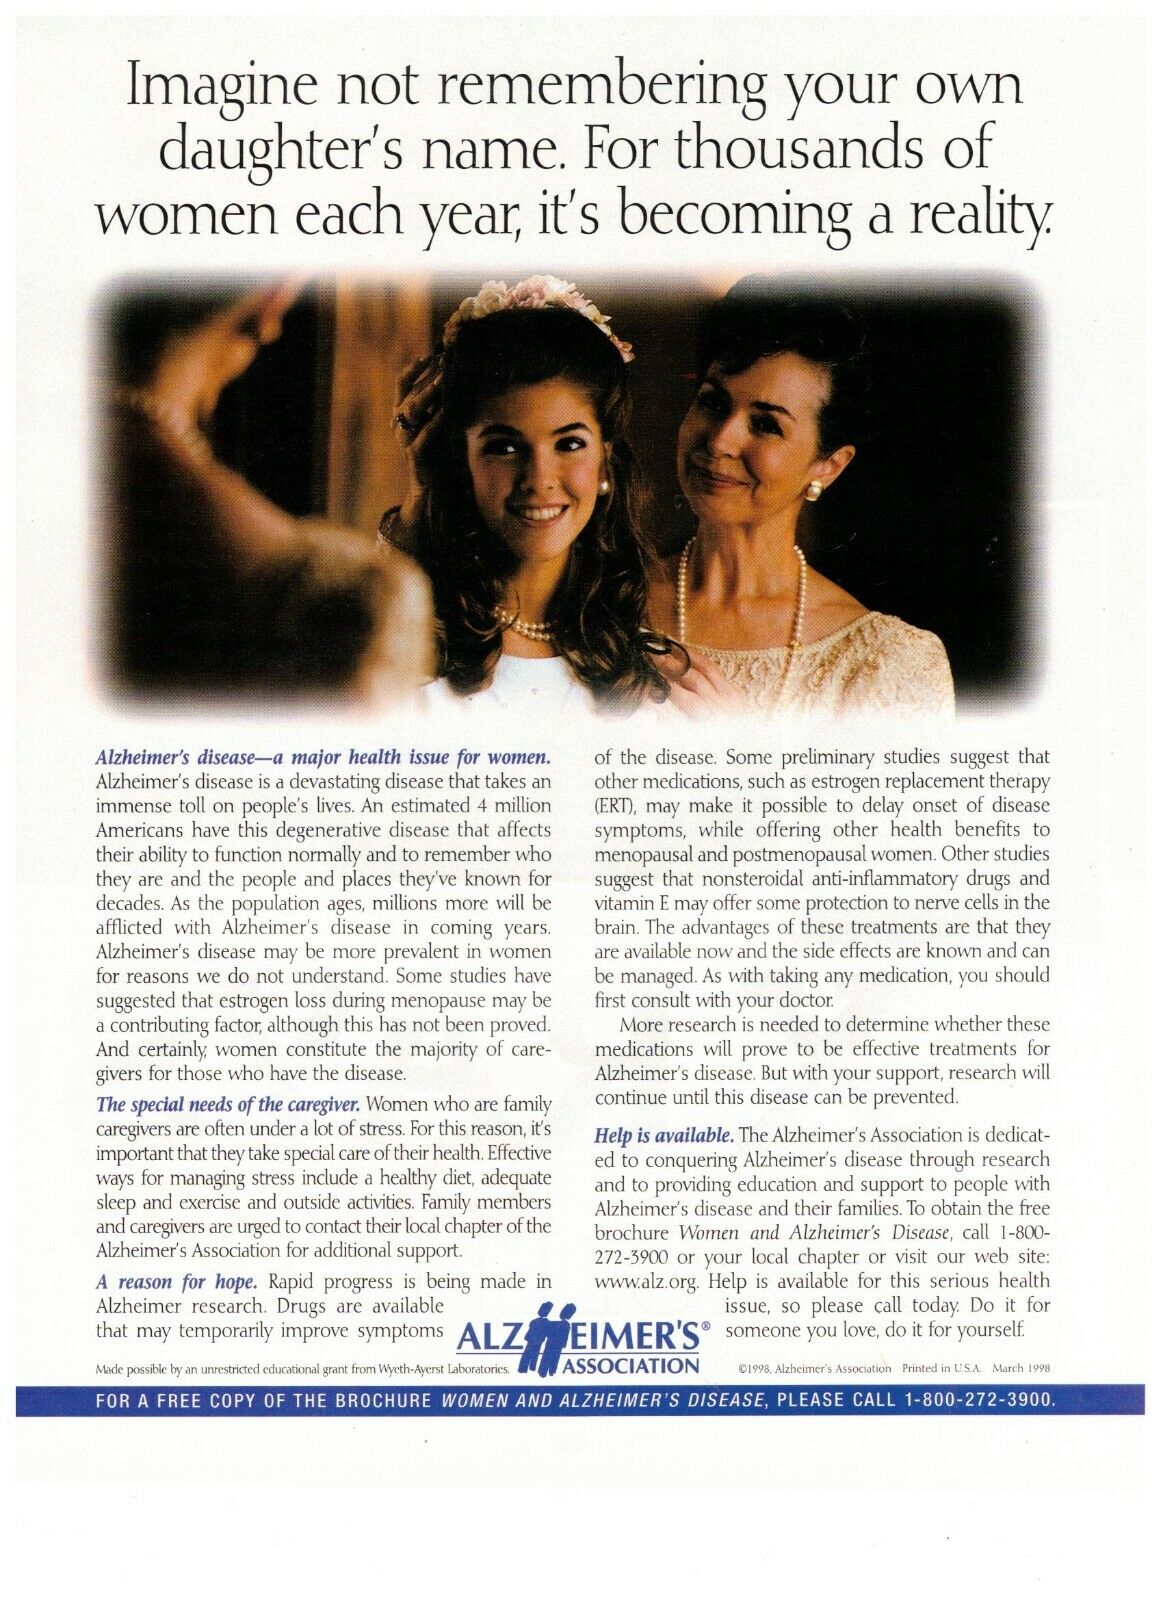 1997 Alzheimer's Association Daughter's Name Vintage Print Advertisement